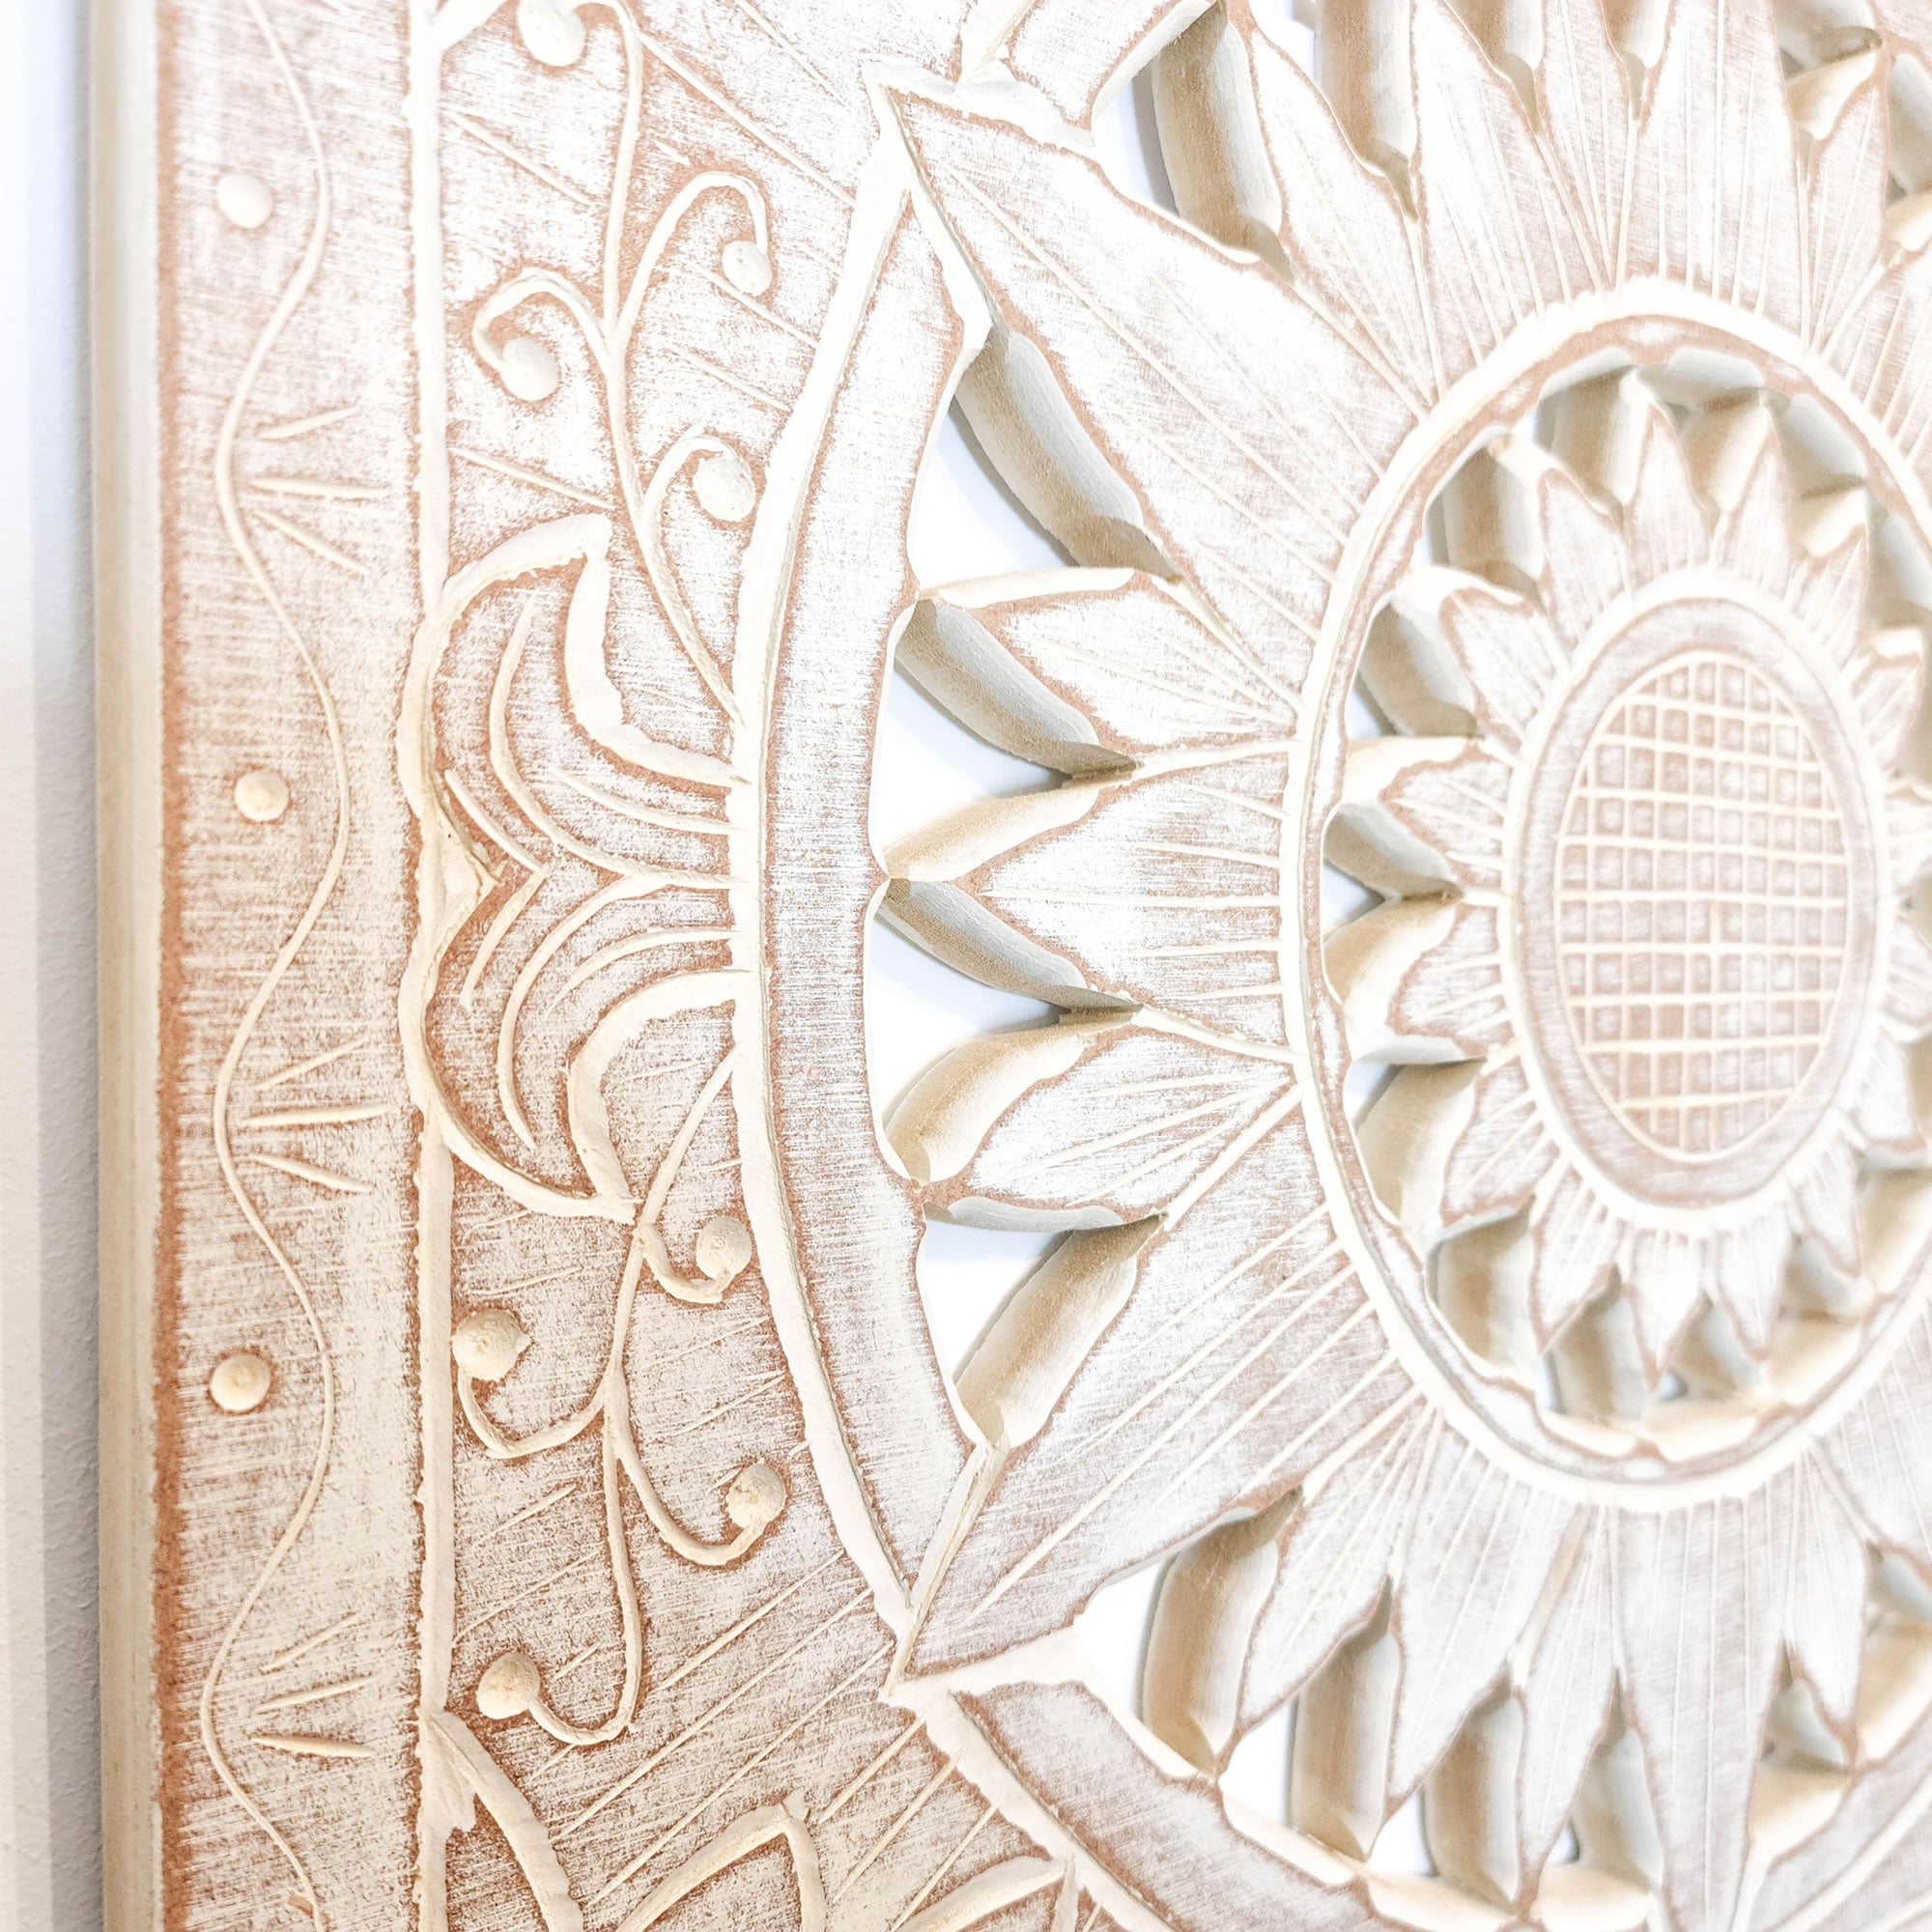 Carved Wooden Wall Art - Decorative Mandala Yoga Distressed Eco Panel Headboard Sculpture